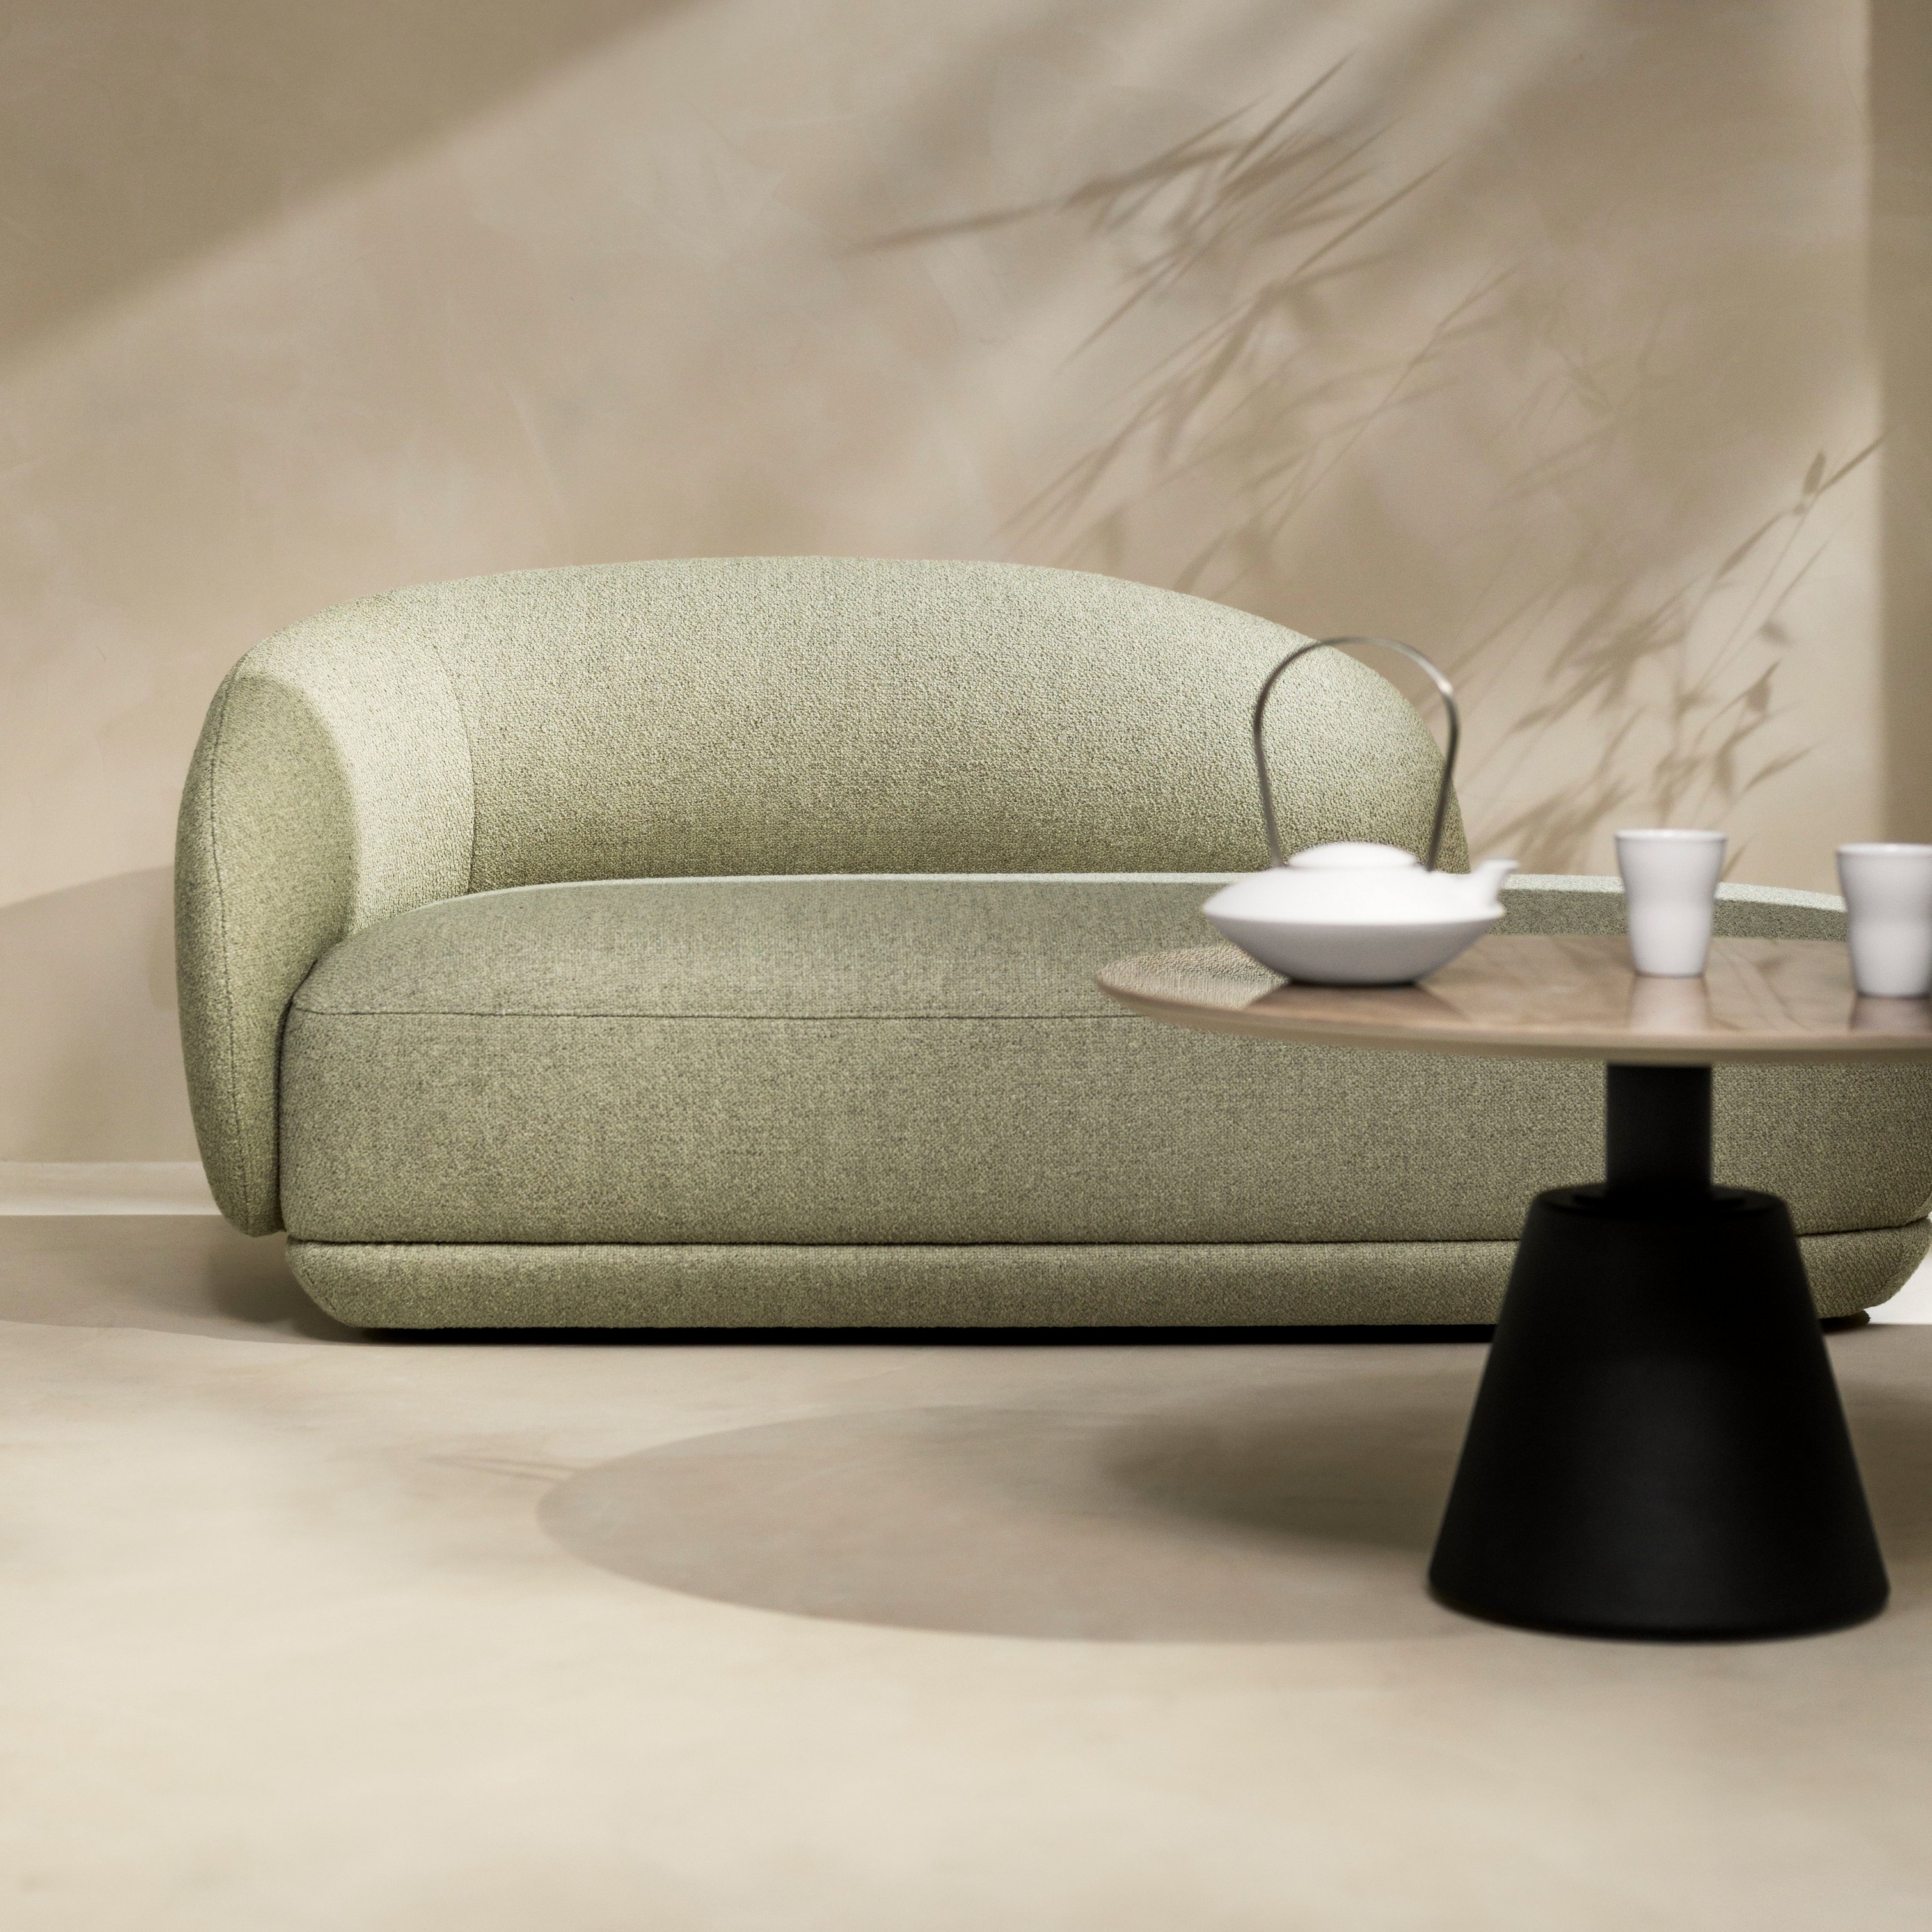 Un salon paisible avec la chaise longue Bolzano en tissu Lazio vert clair